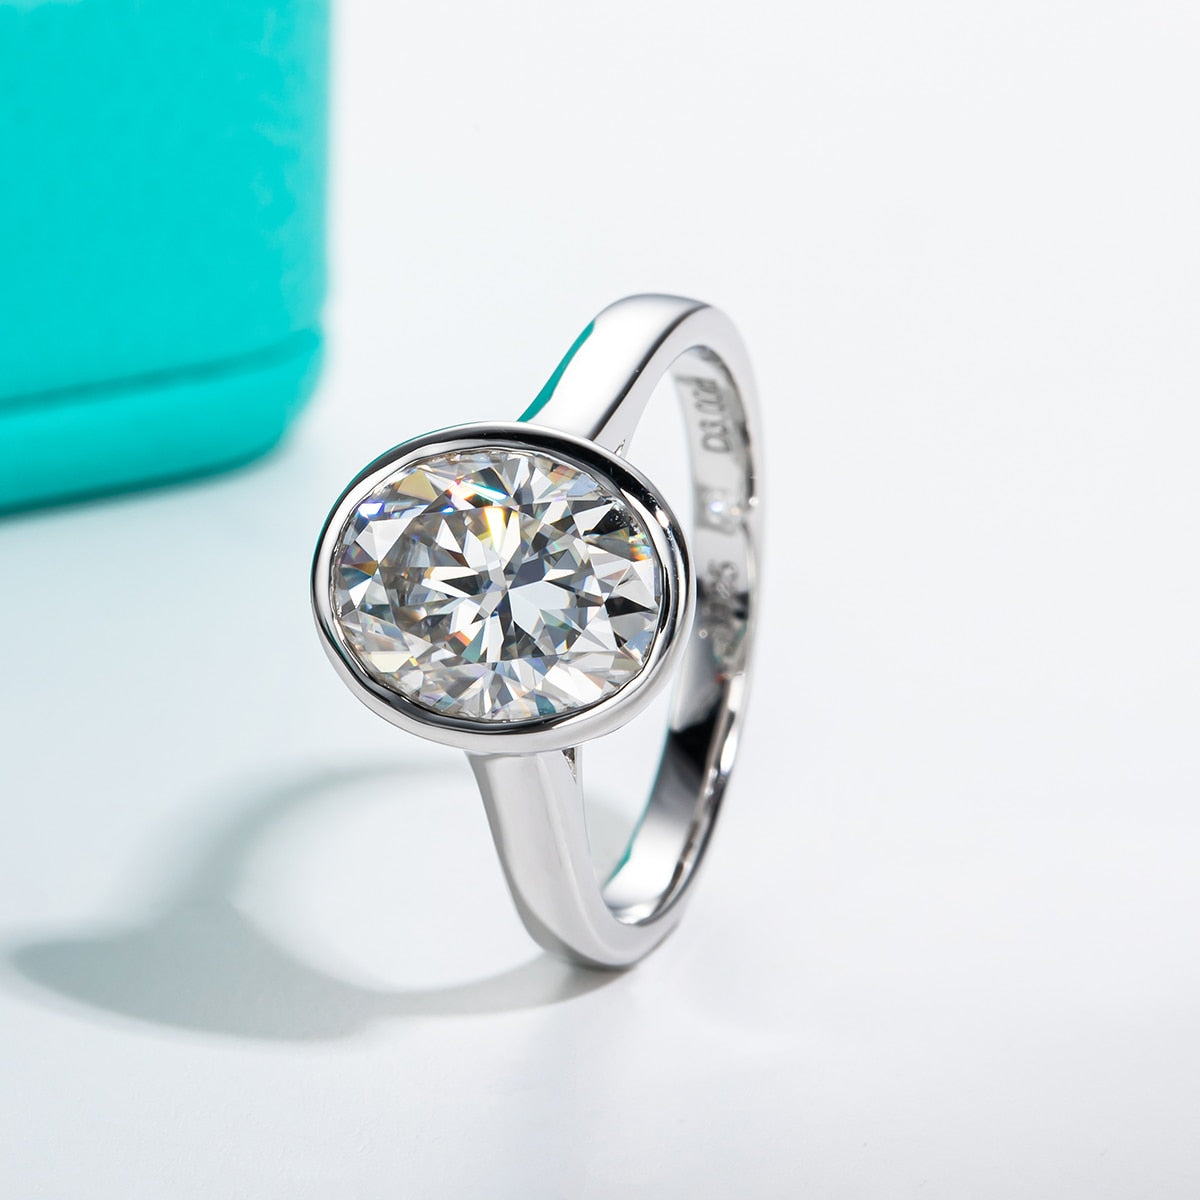 3 Carat Oval Shape Moissanite Diamond Engagement Ring Sterling Silver